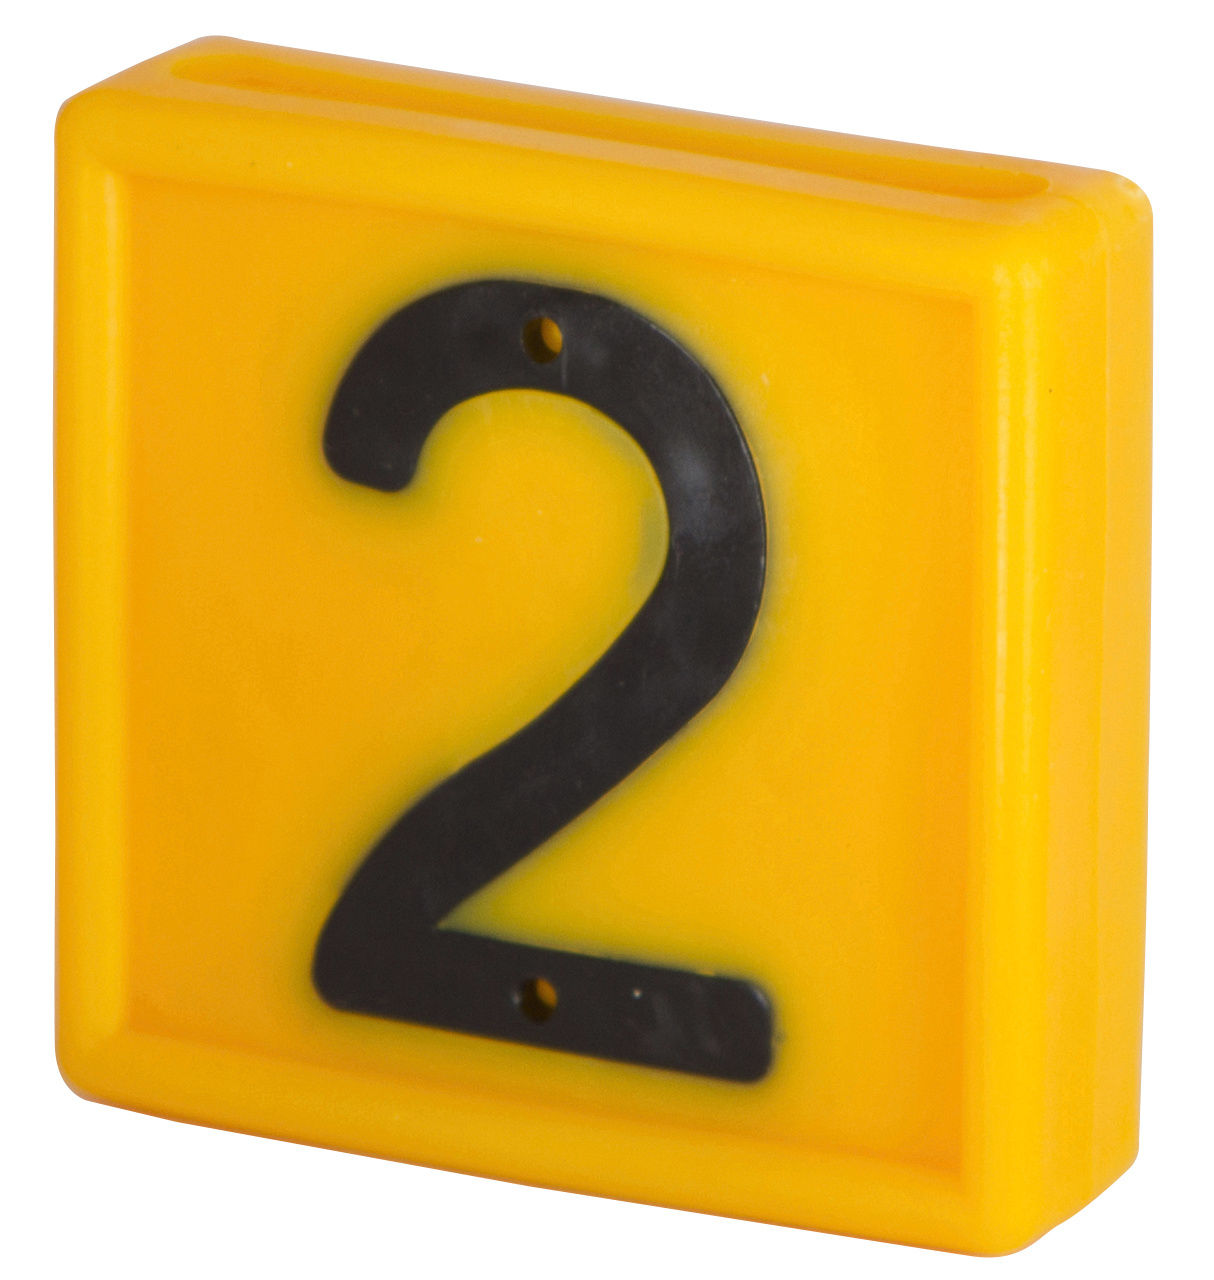 Nummernblock Nr. 2, gelb, einstellig, 44 x 46 mm